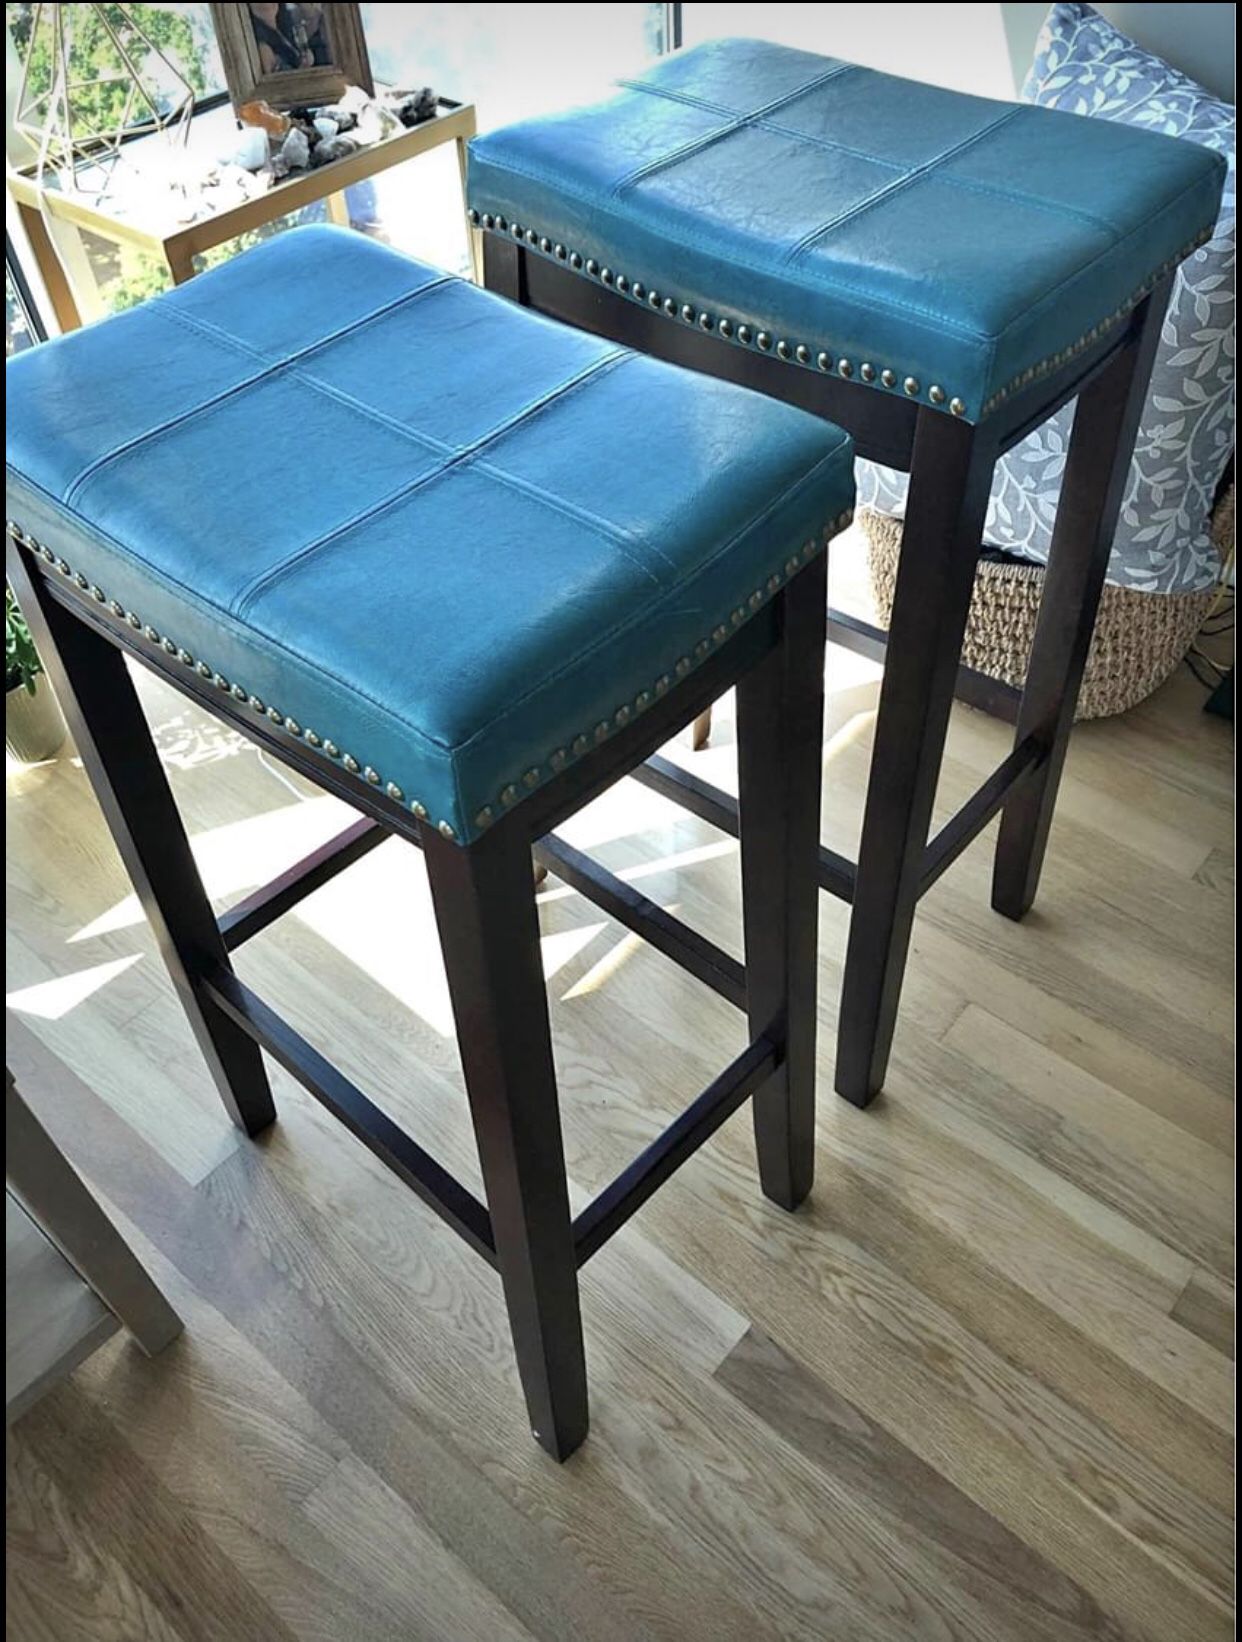 2 bar stools and free 24x30 Mirror!